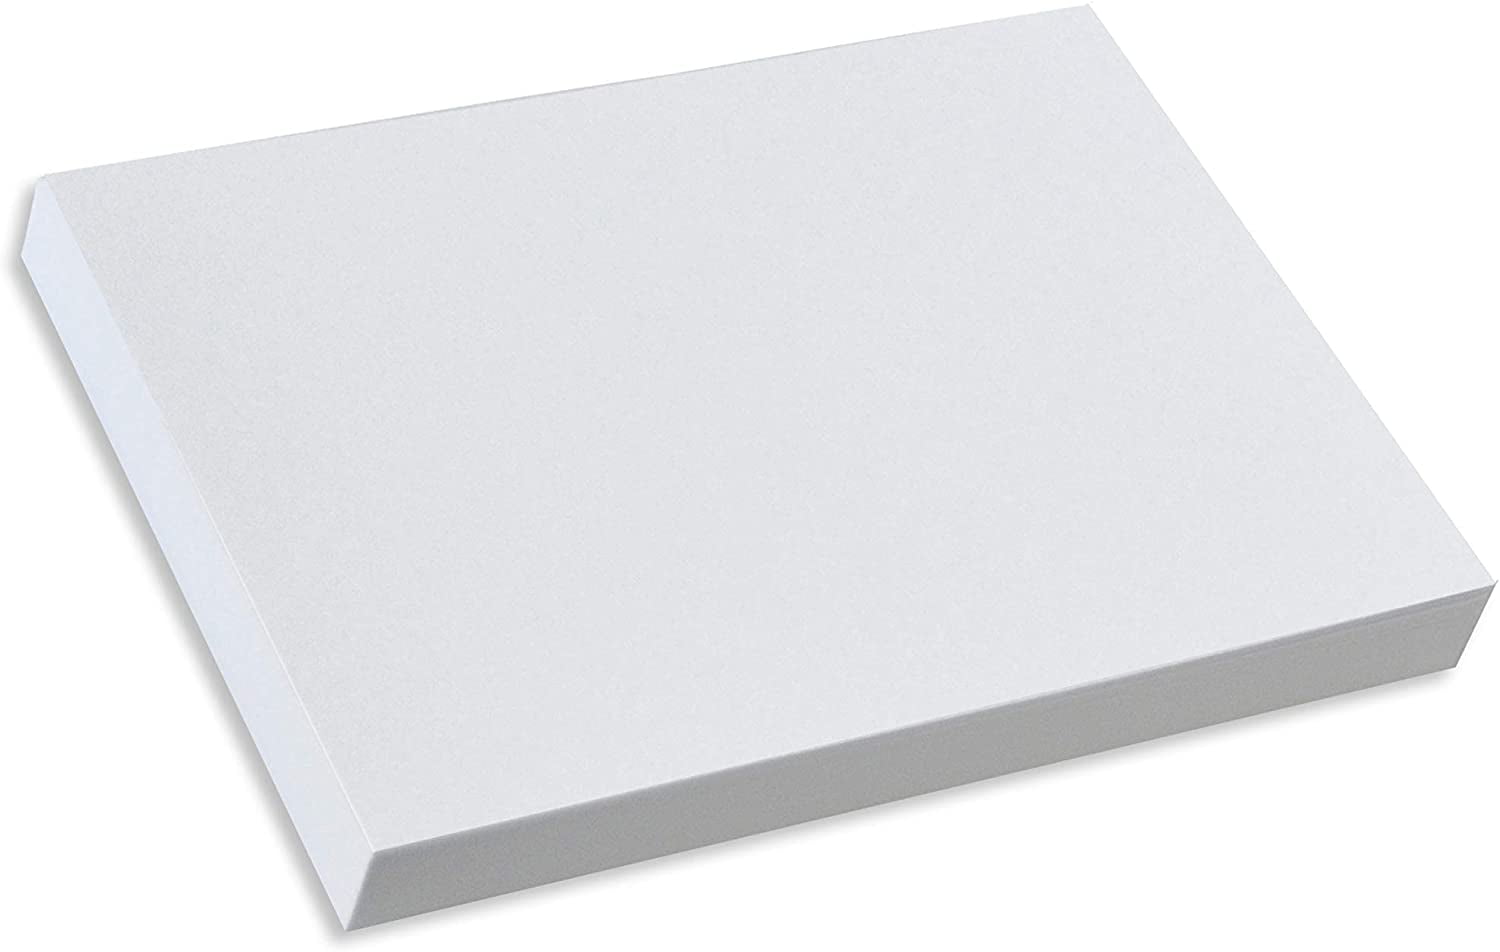 Home Advantage Set of 50 Blank Plain White 4x6 Index Cards, Postcards